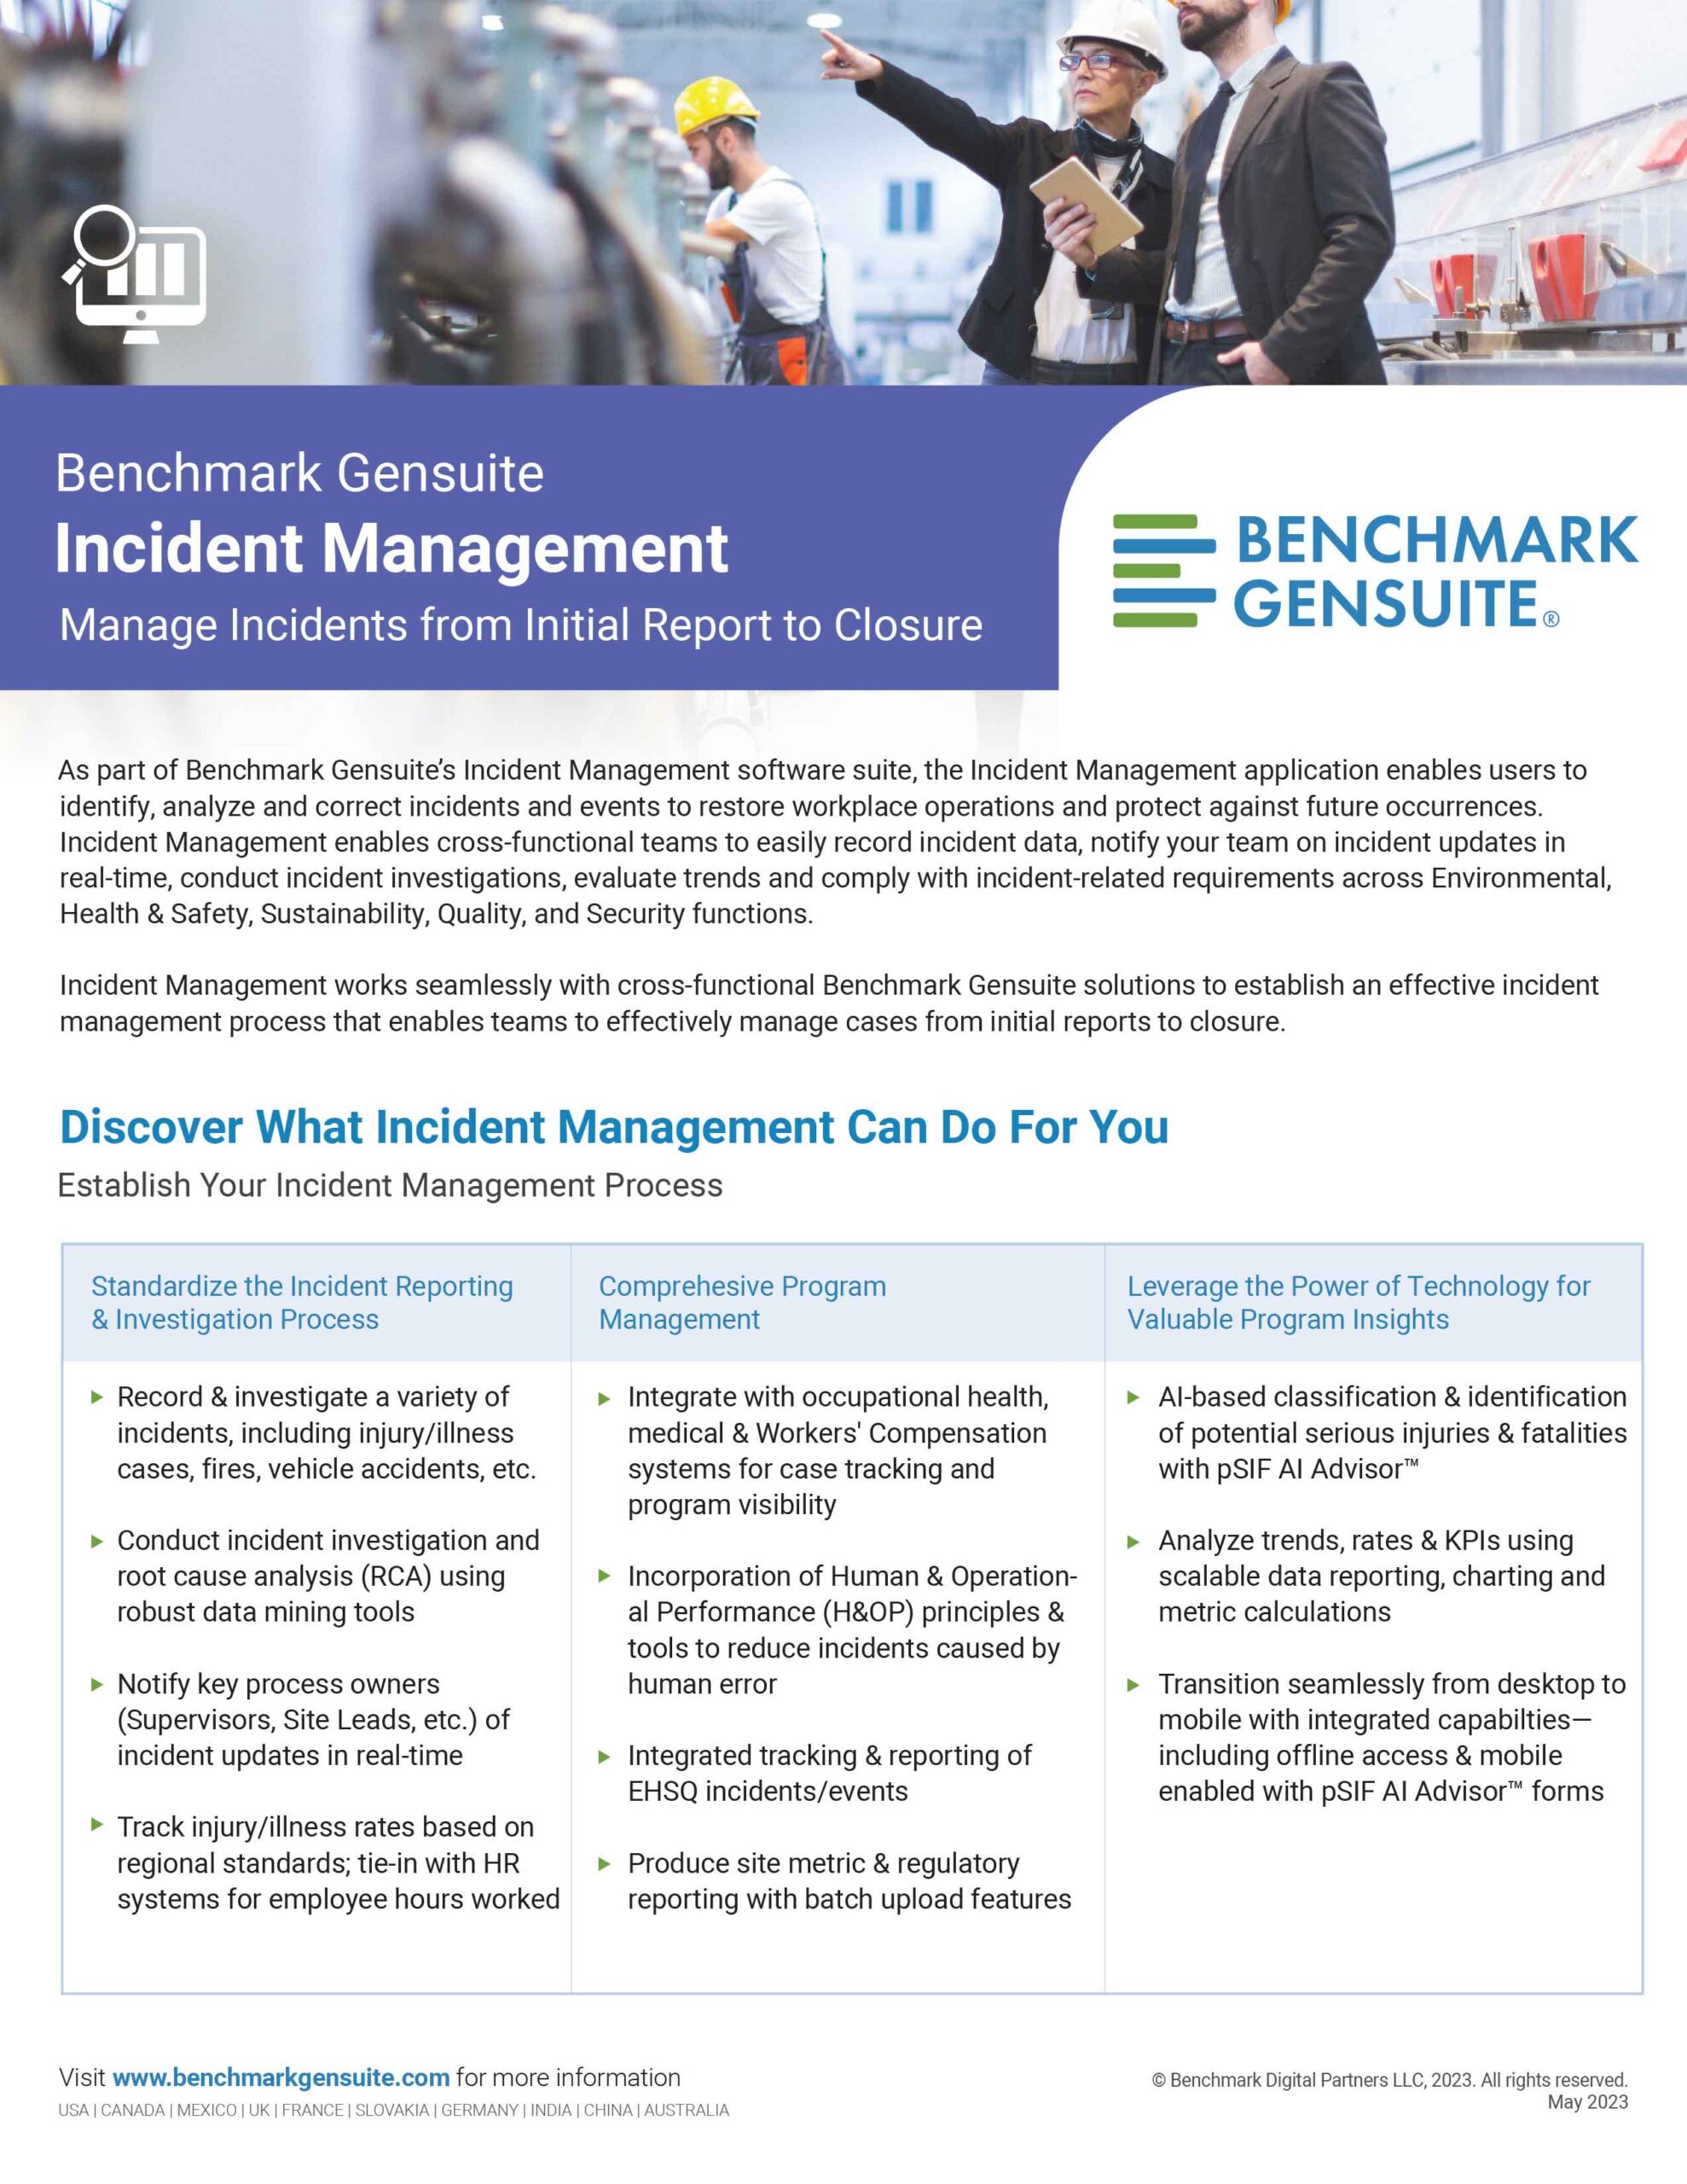 Incident Management 